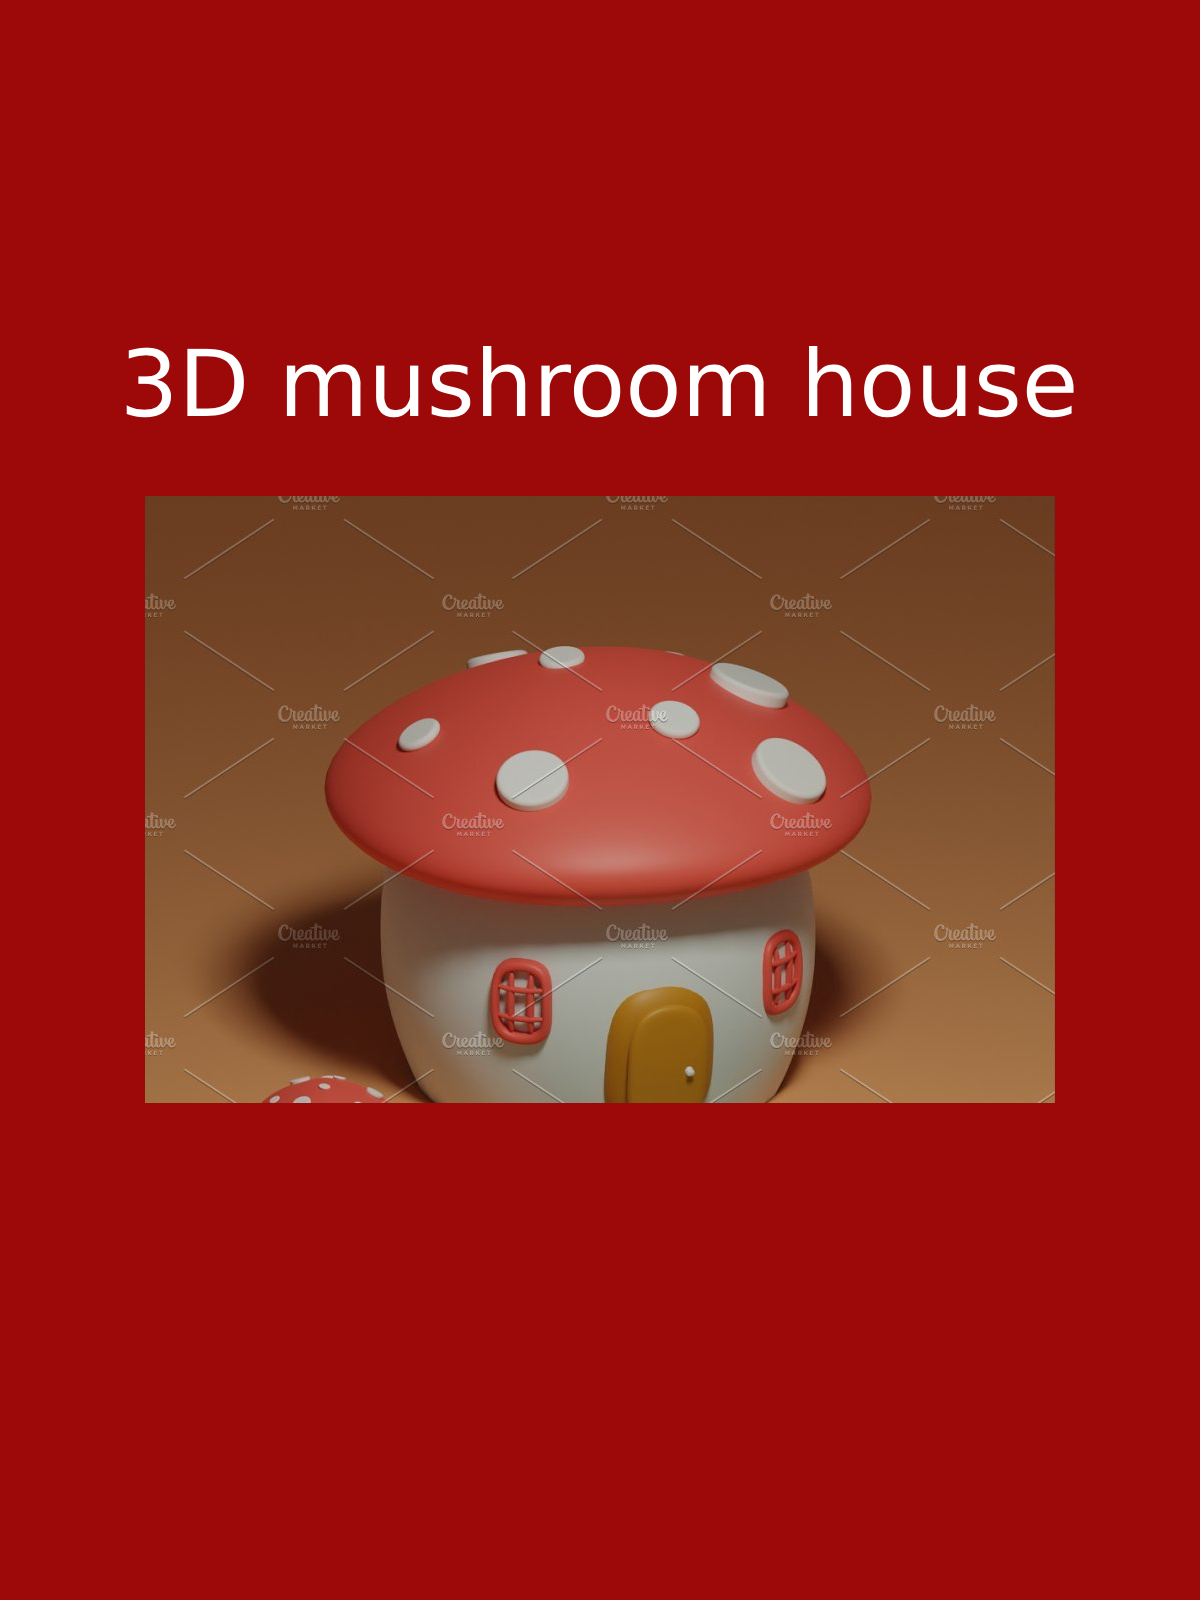 3d mushroom house pinterest image preview. 347